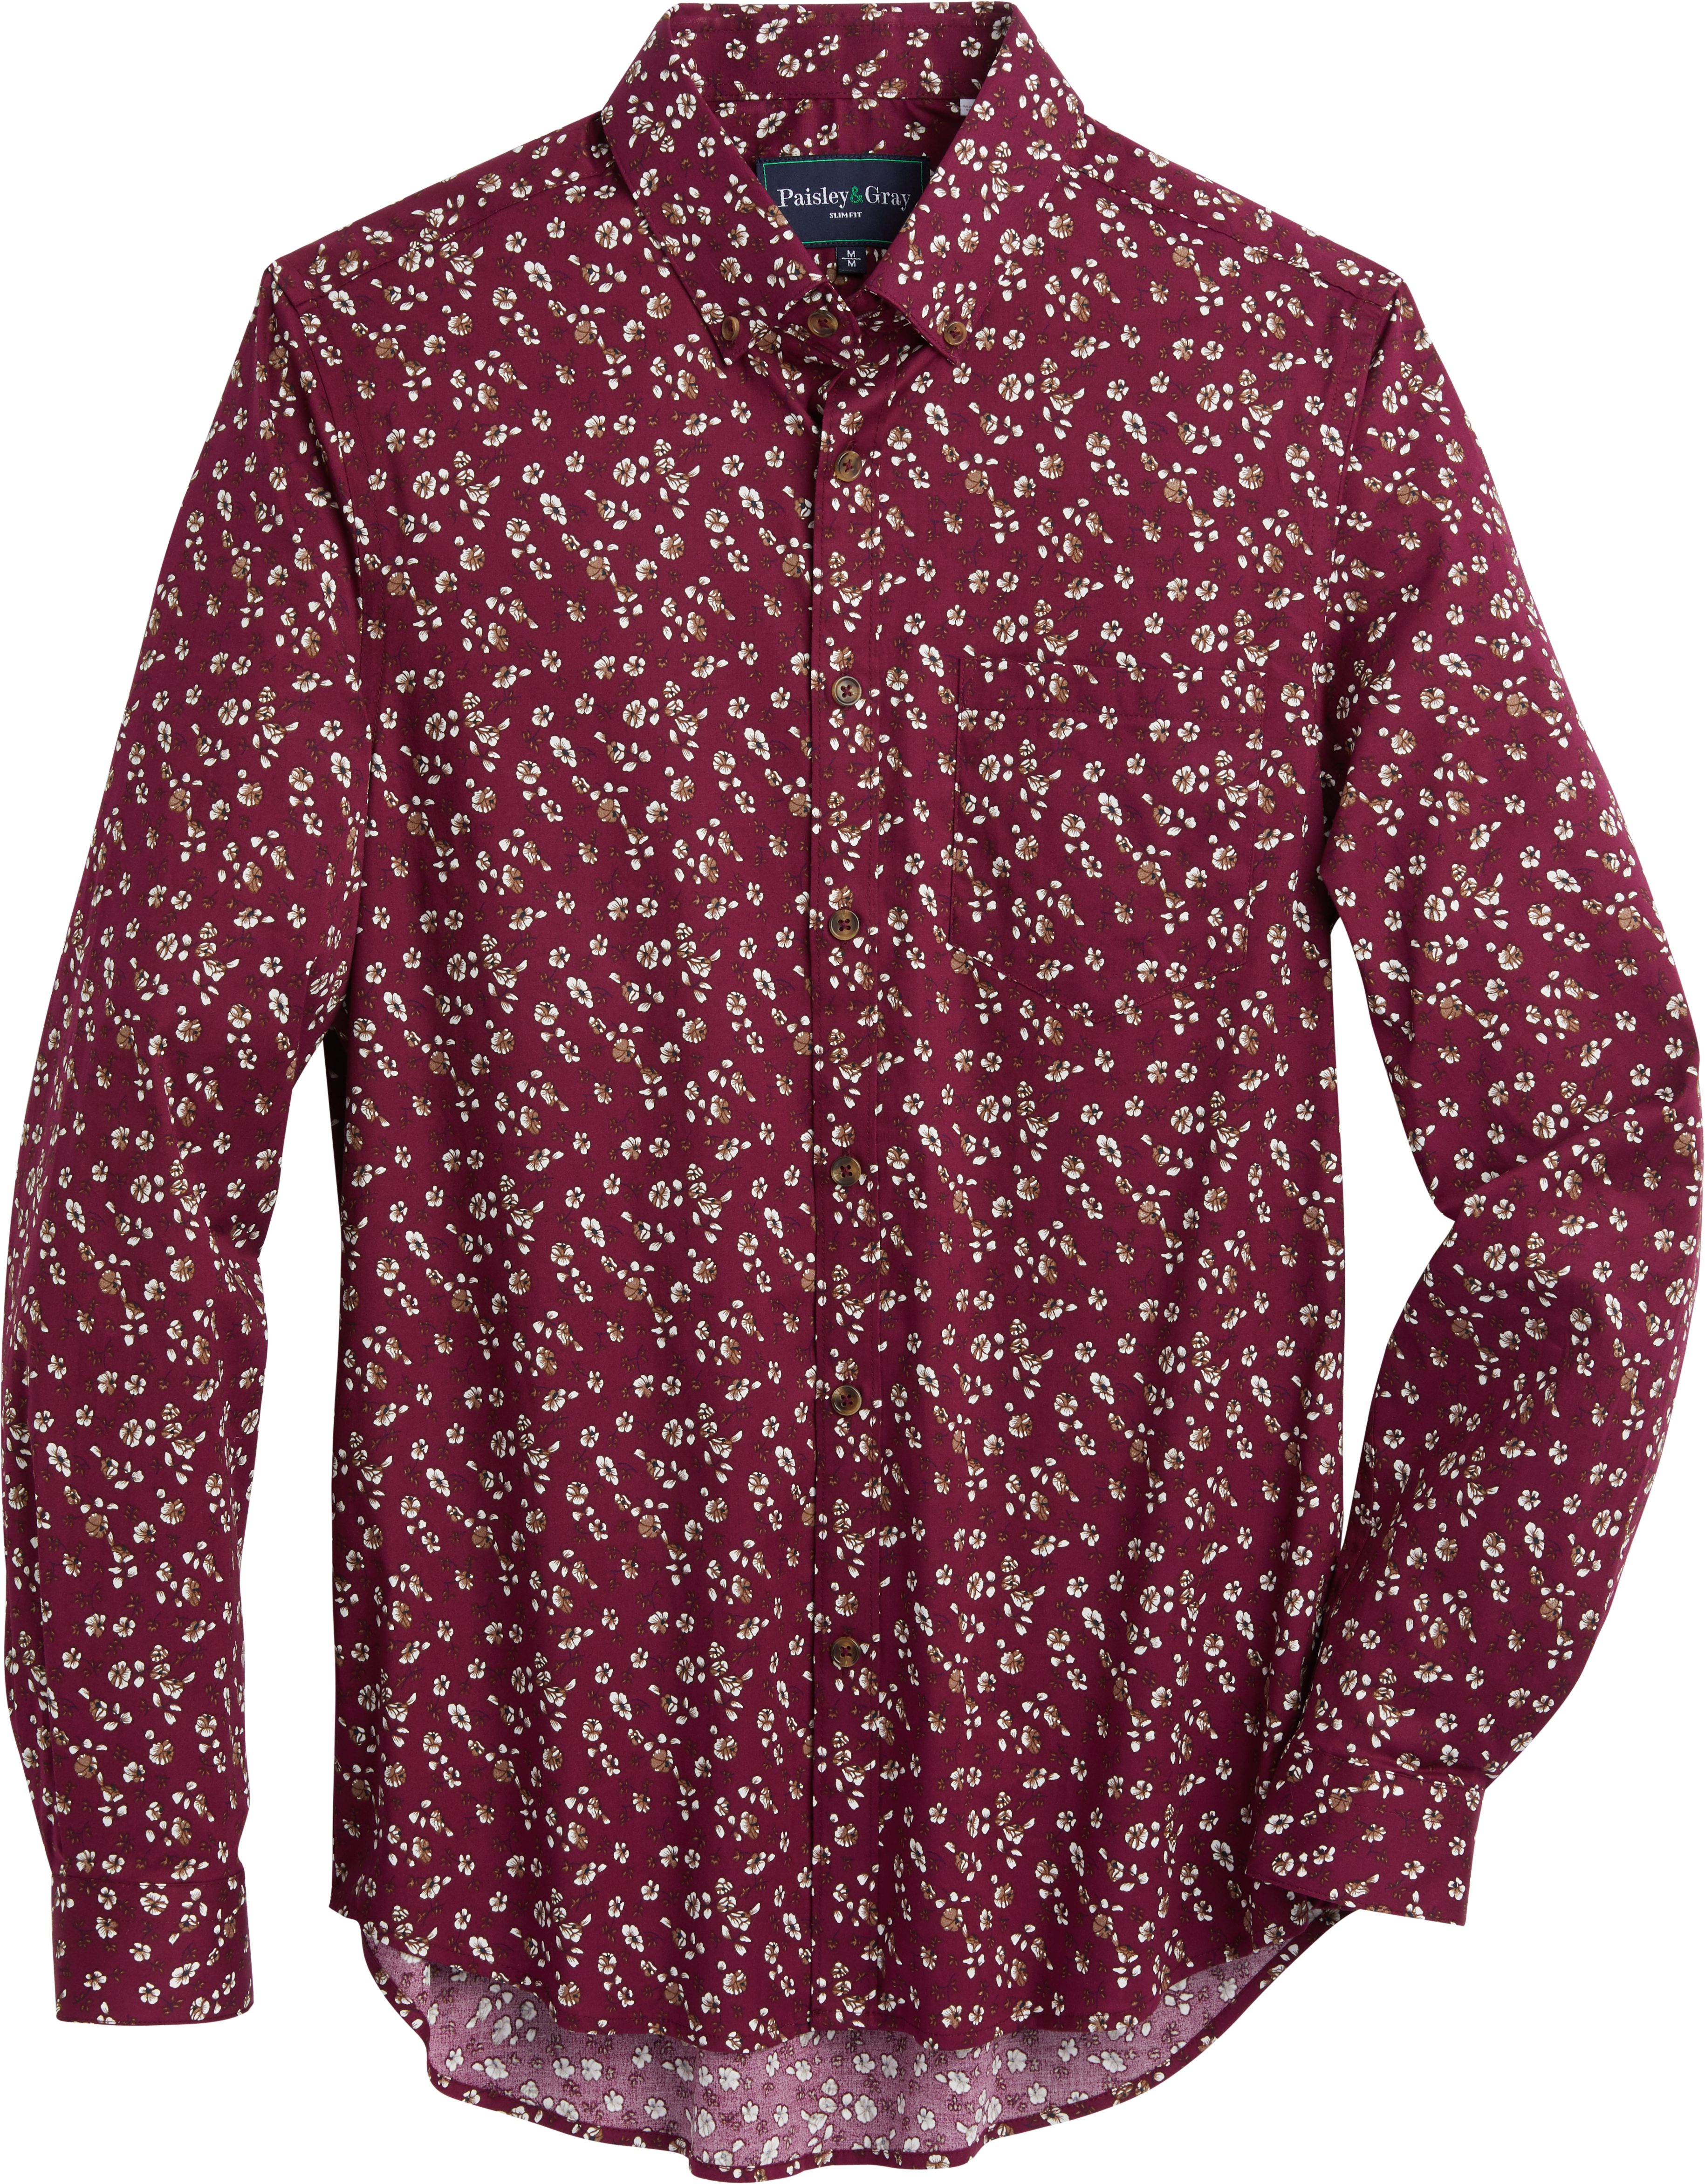 Paisley & Gray Slim Fit Sport Shirt, Burgundy & Brown Floral - Men's